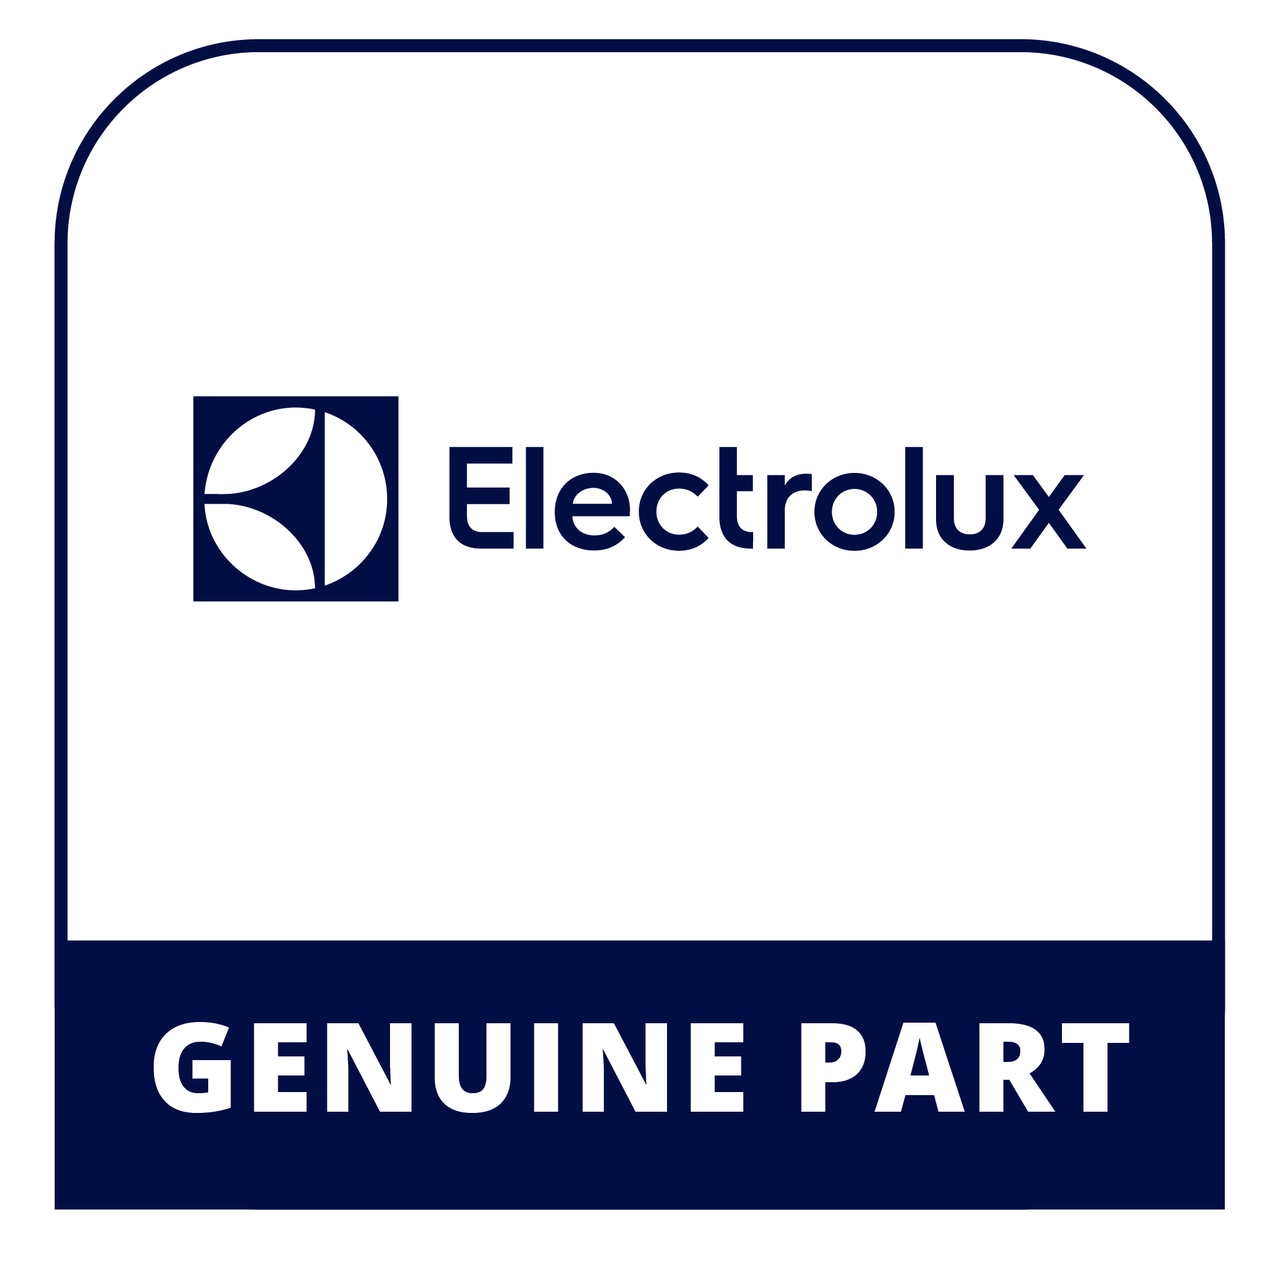 Frigidaire - Electrolux 316499806 - Grate Set - Genuine Electrolux Part